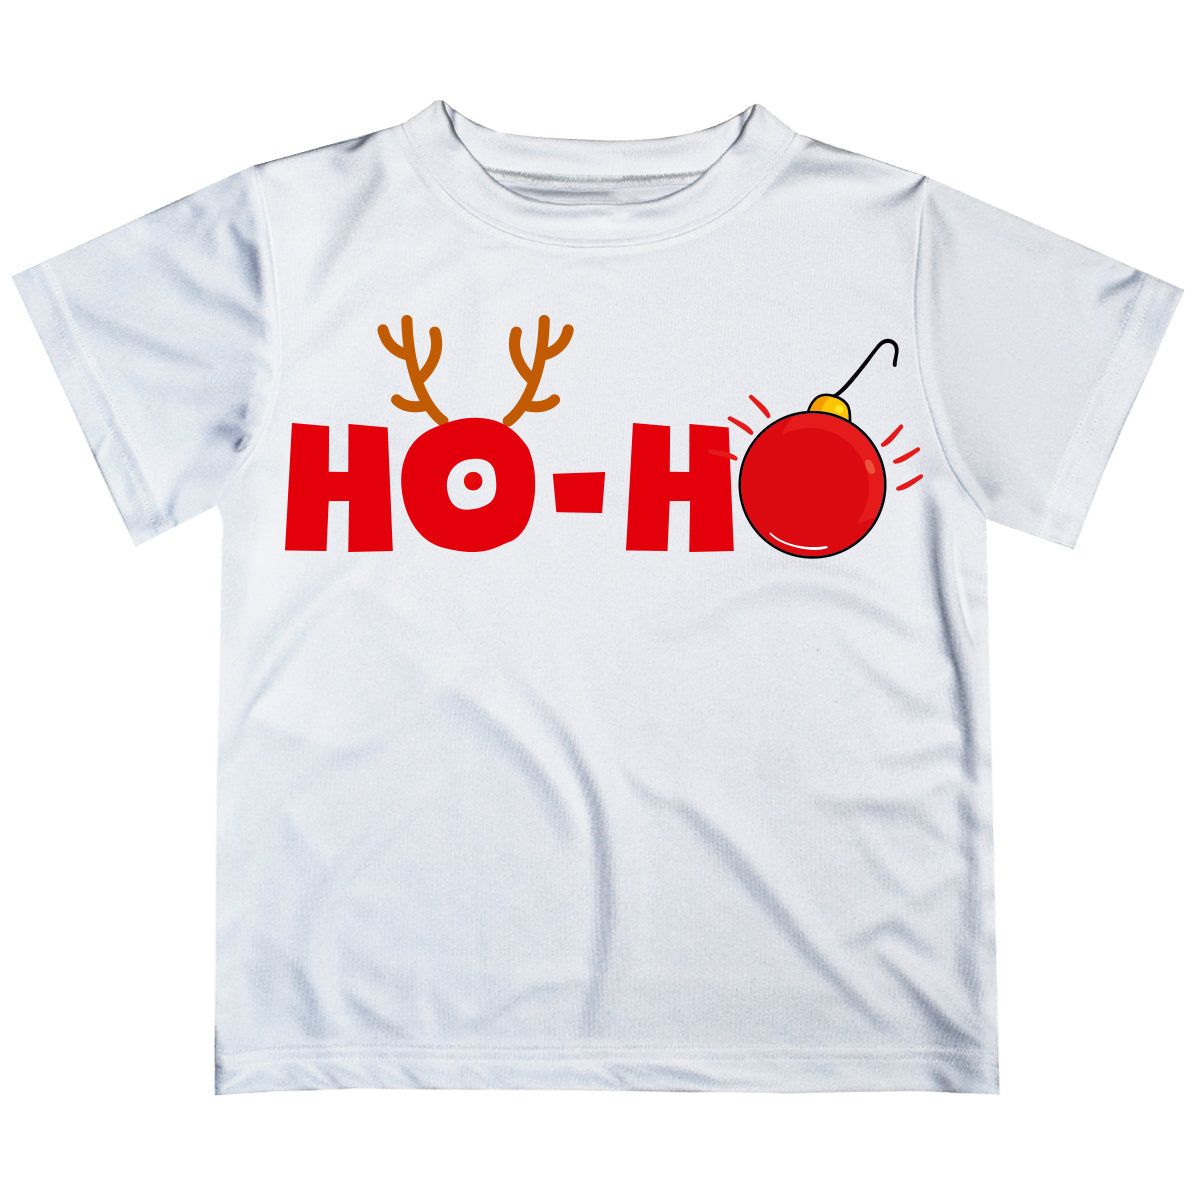 White ho ho short sleeve tee shirt with monogram - Wimziy&Co.